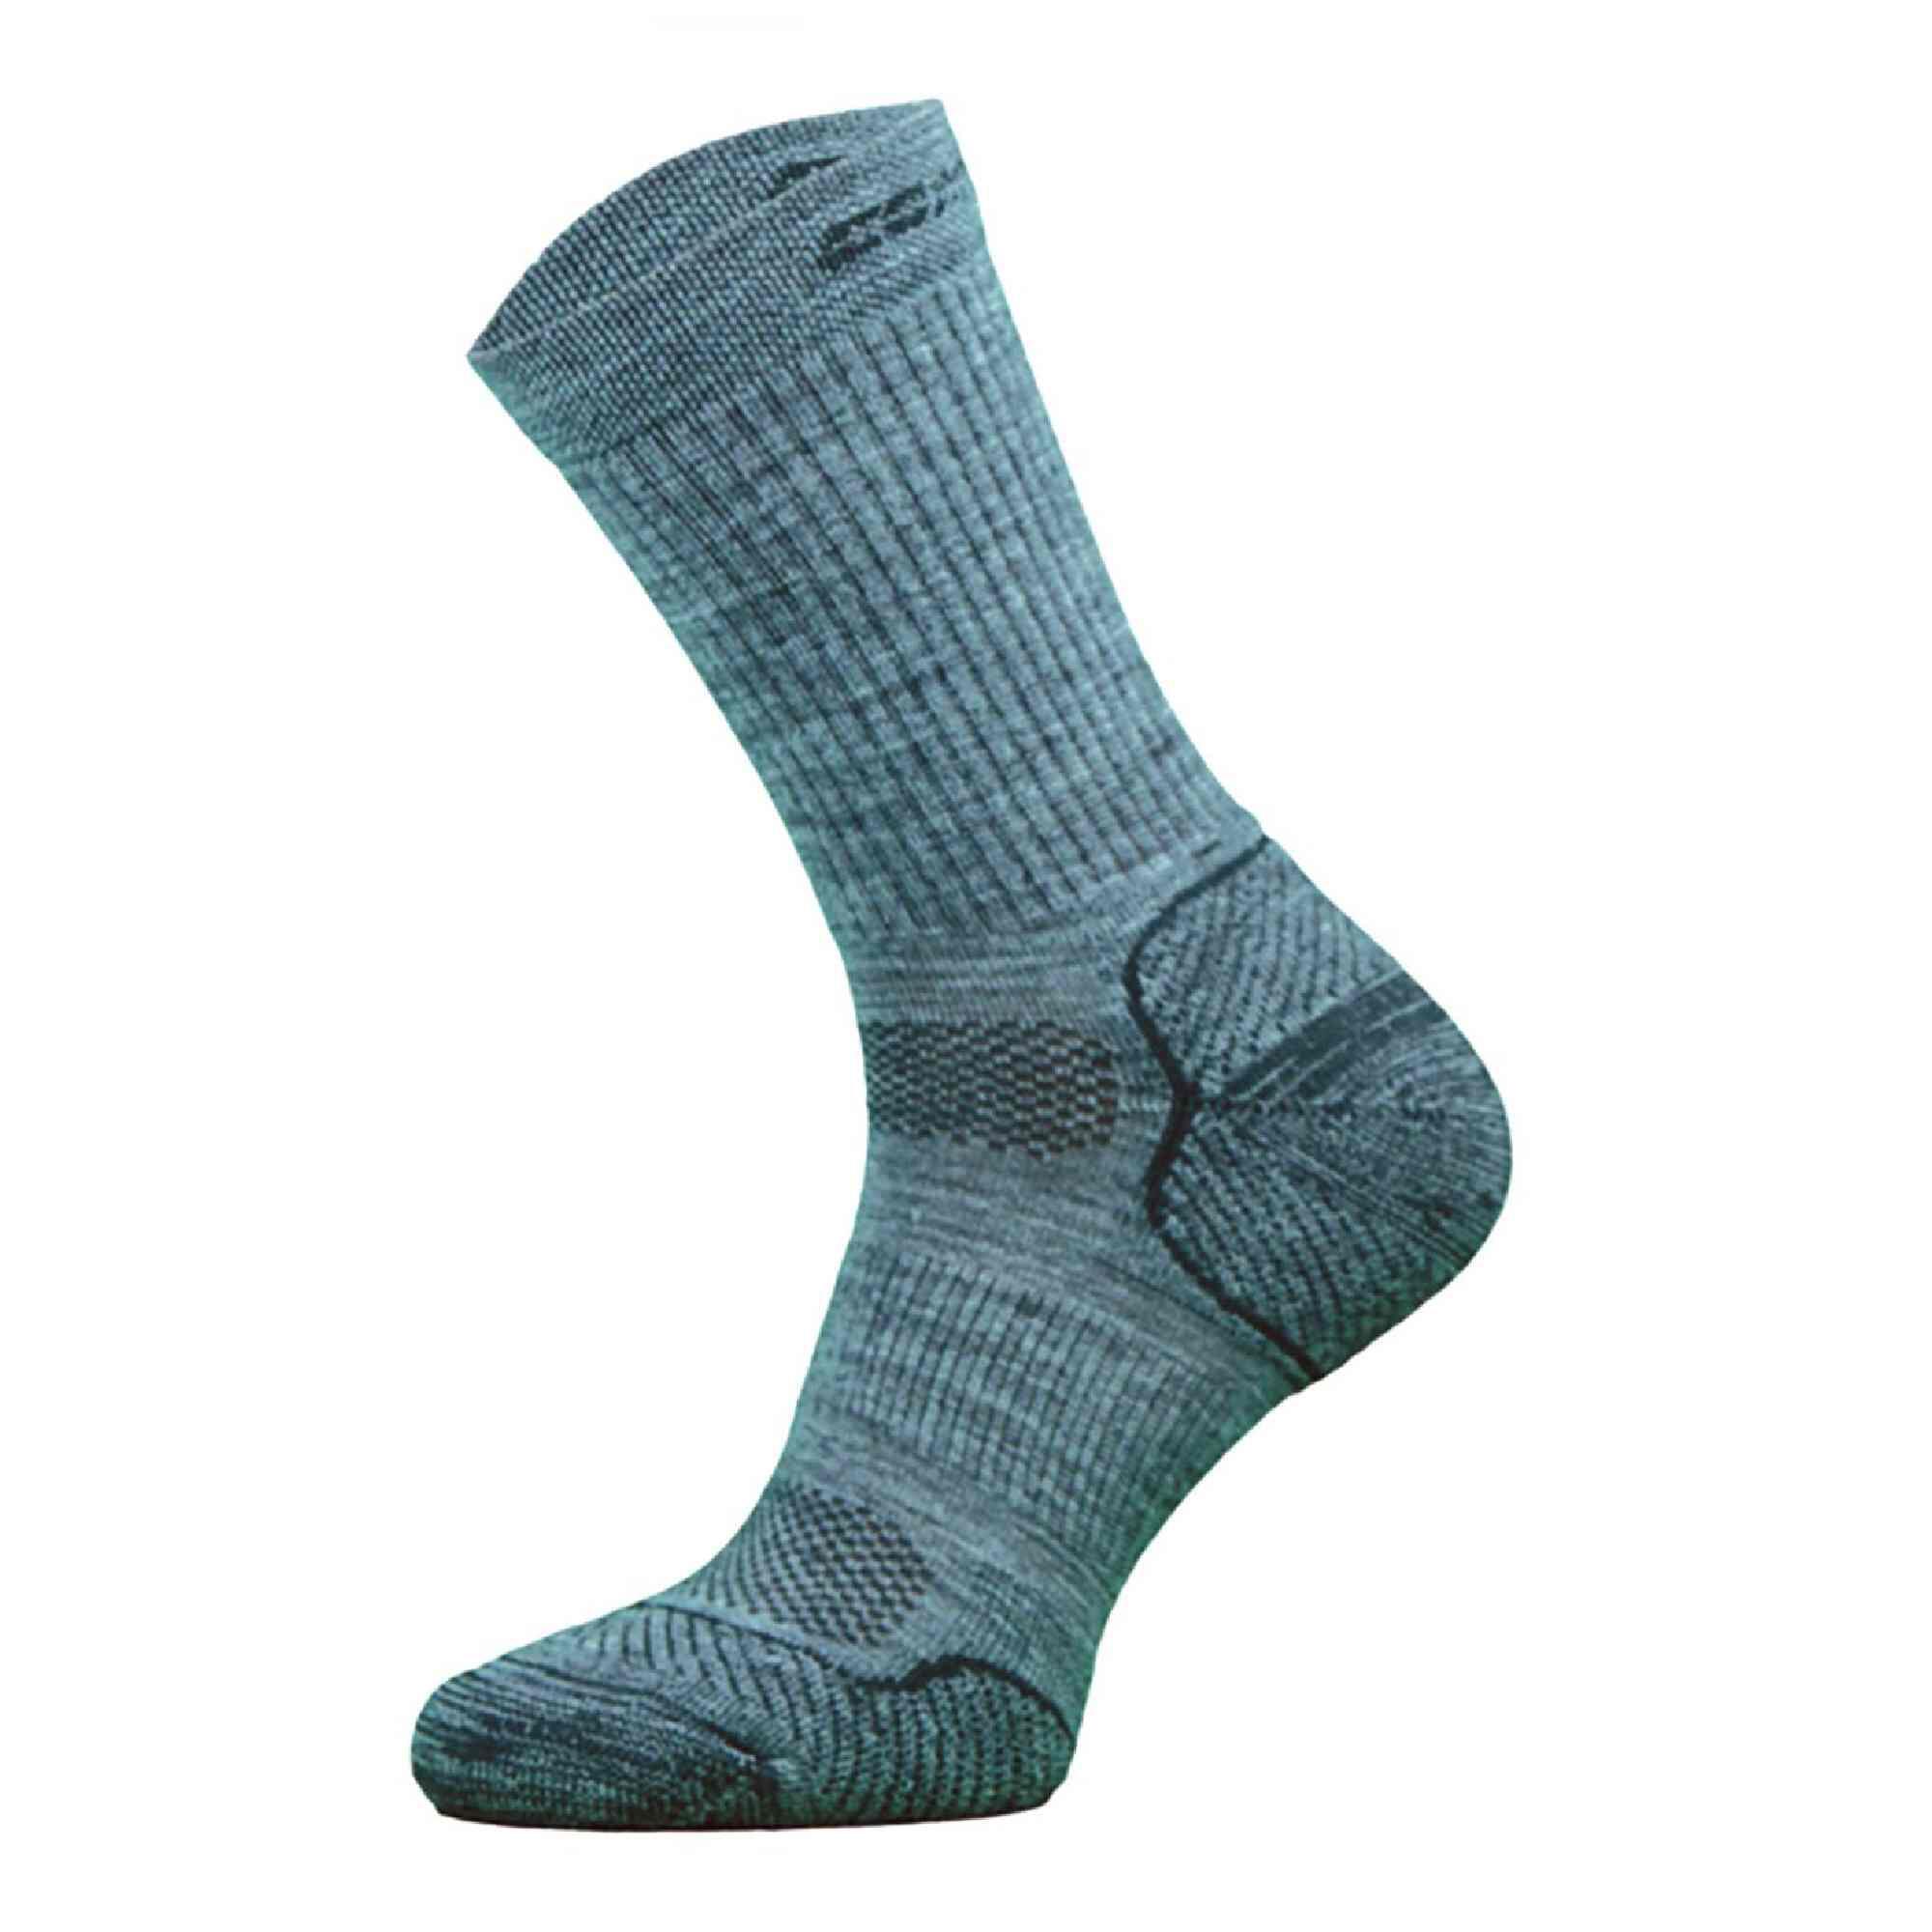 COMODO Outdoor Performance Merino Wool Quick Drying Lightweight Socks